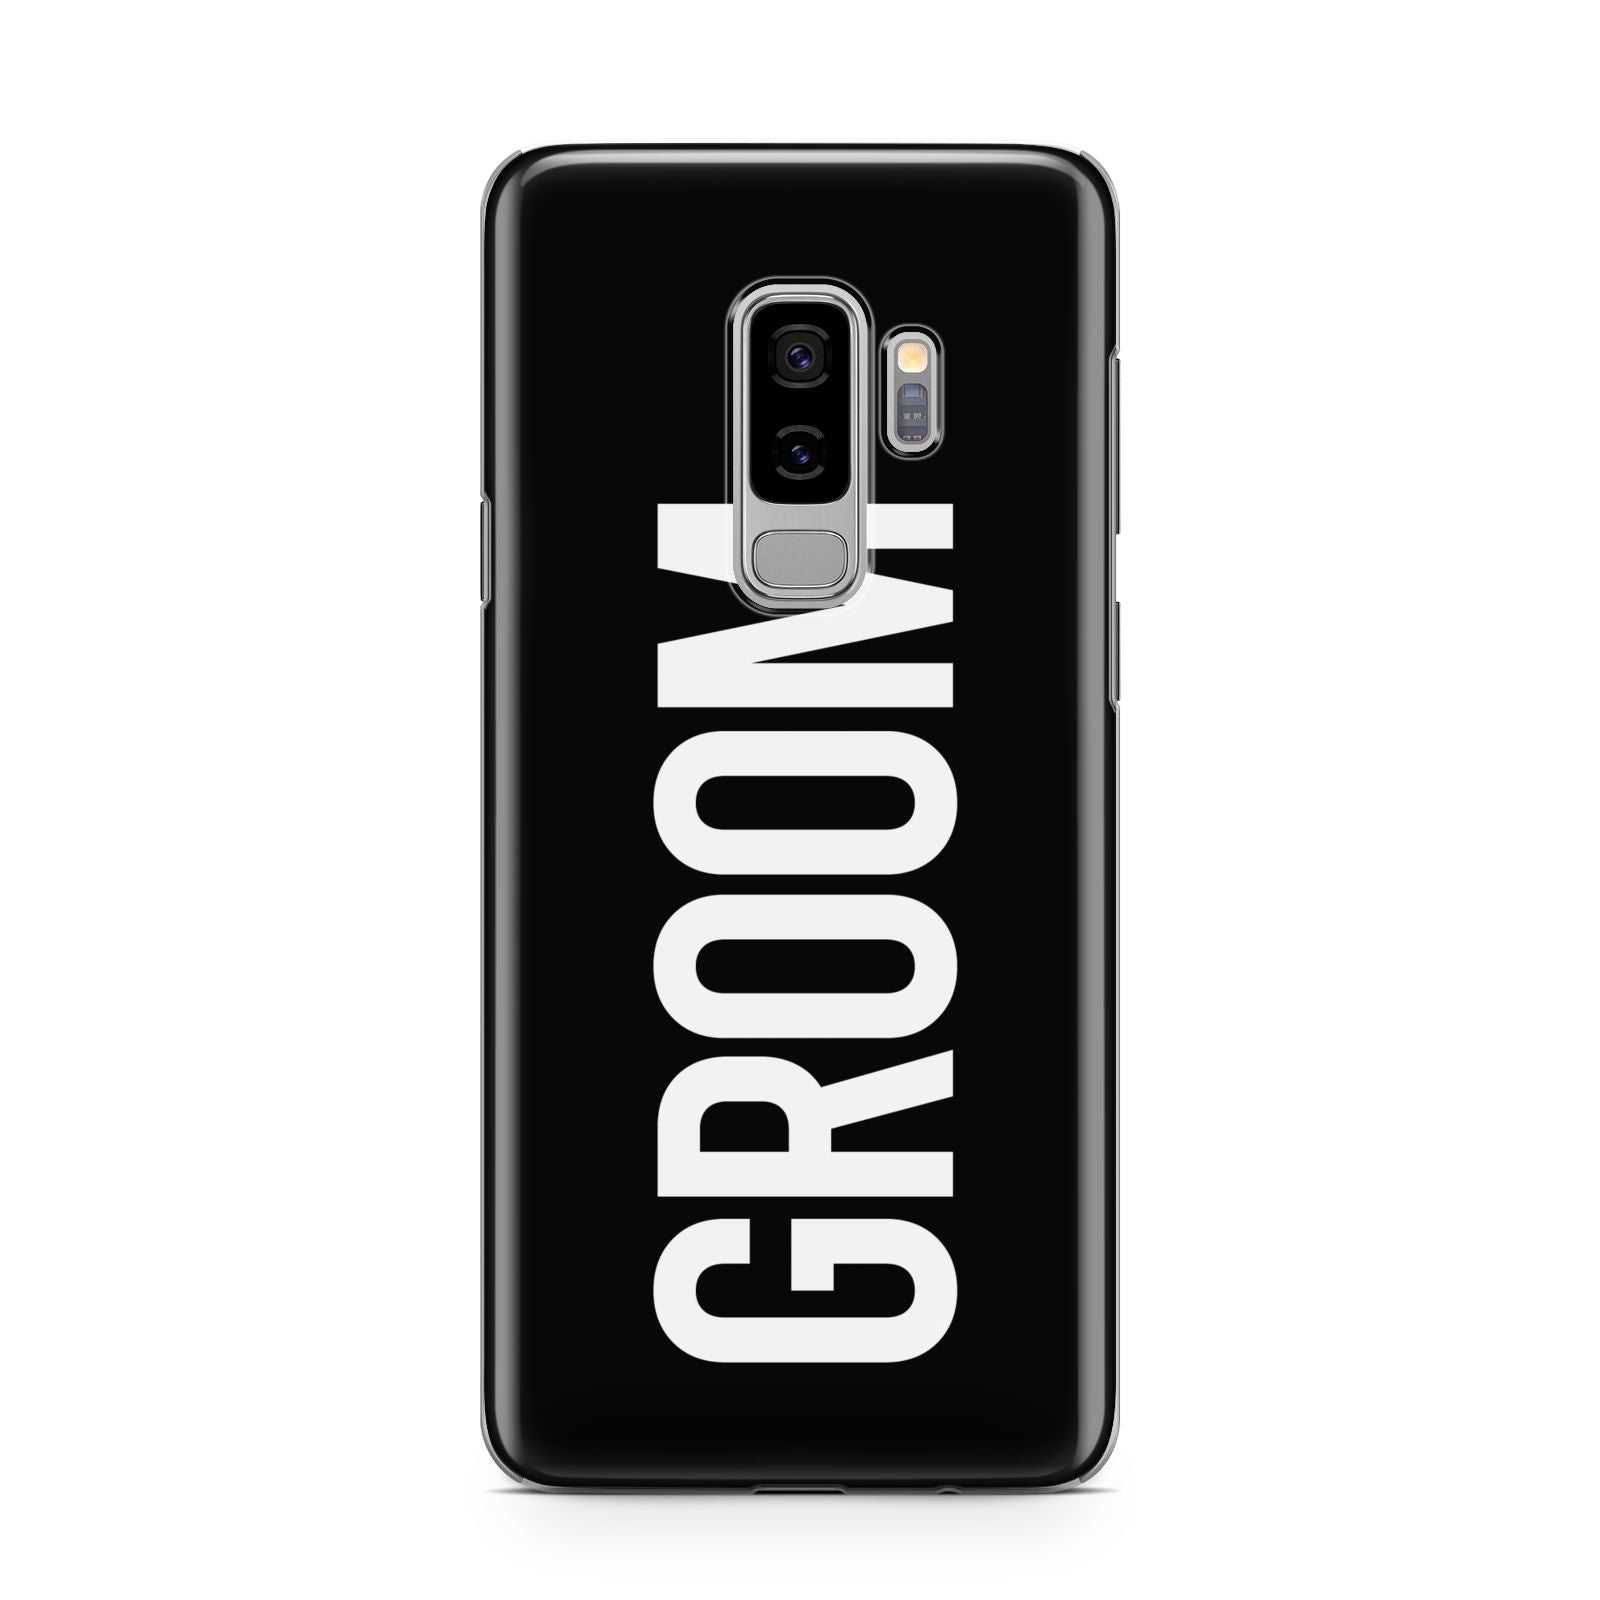 Groom Samsung Galaxy S9 Plus Case on Silver phone